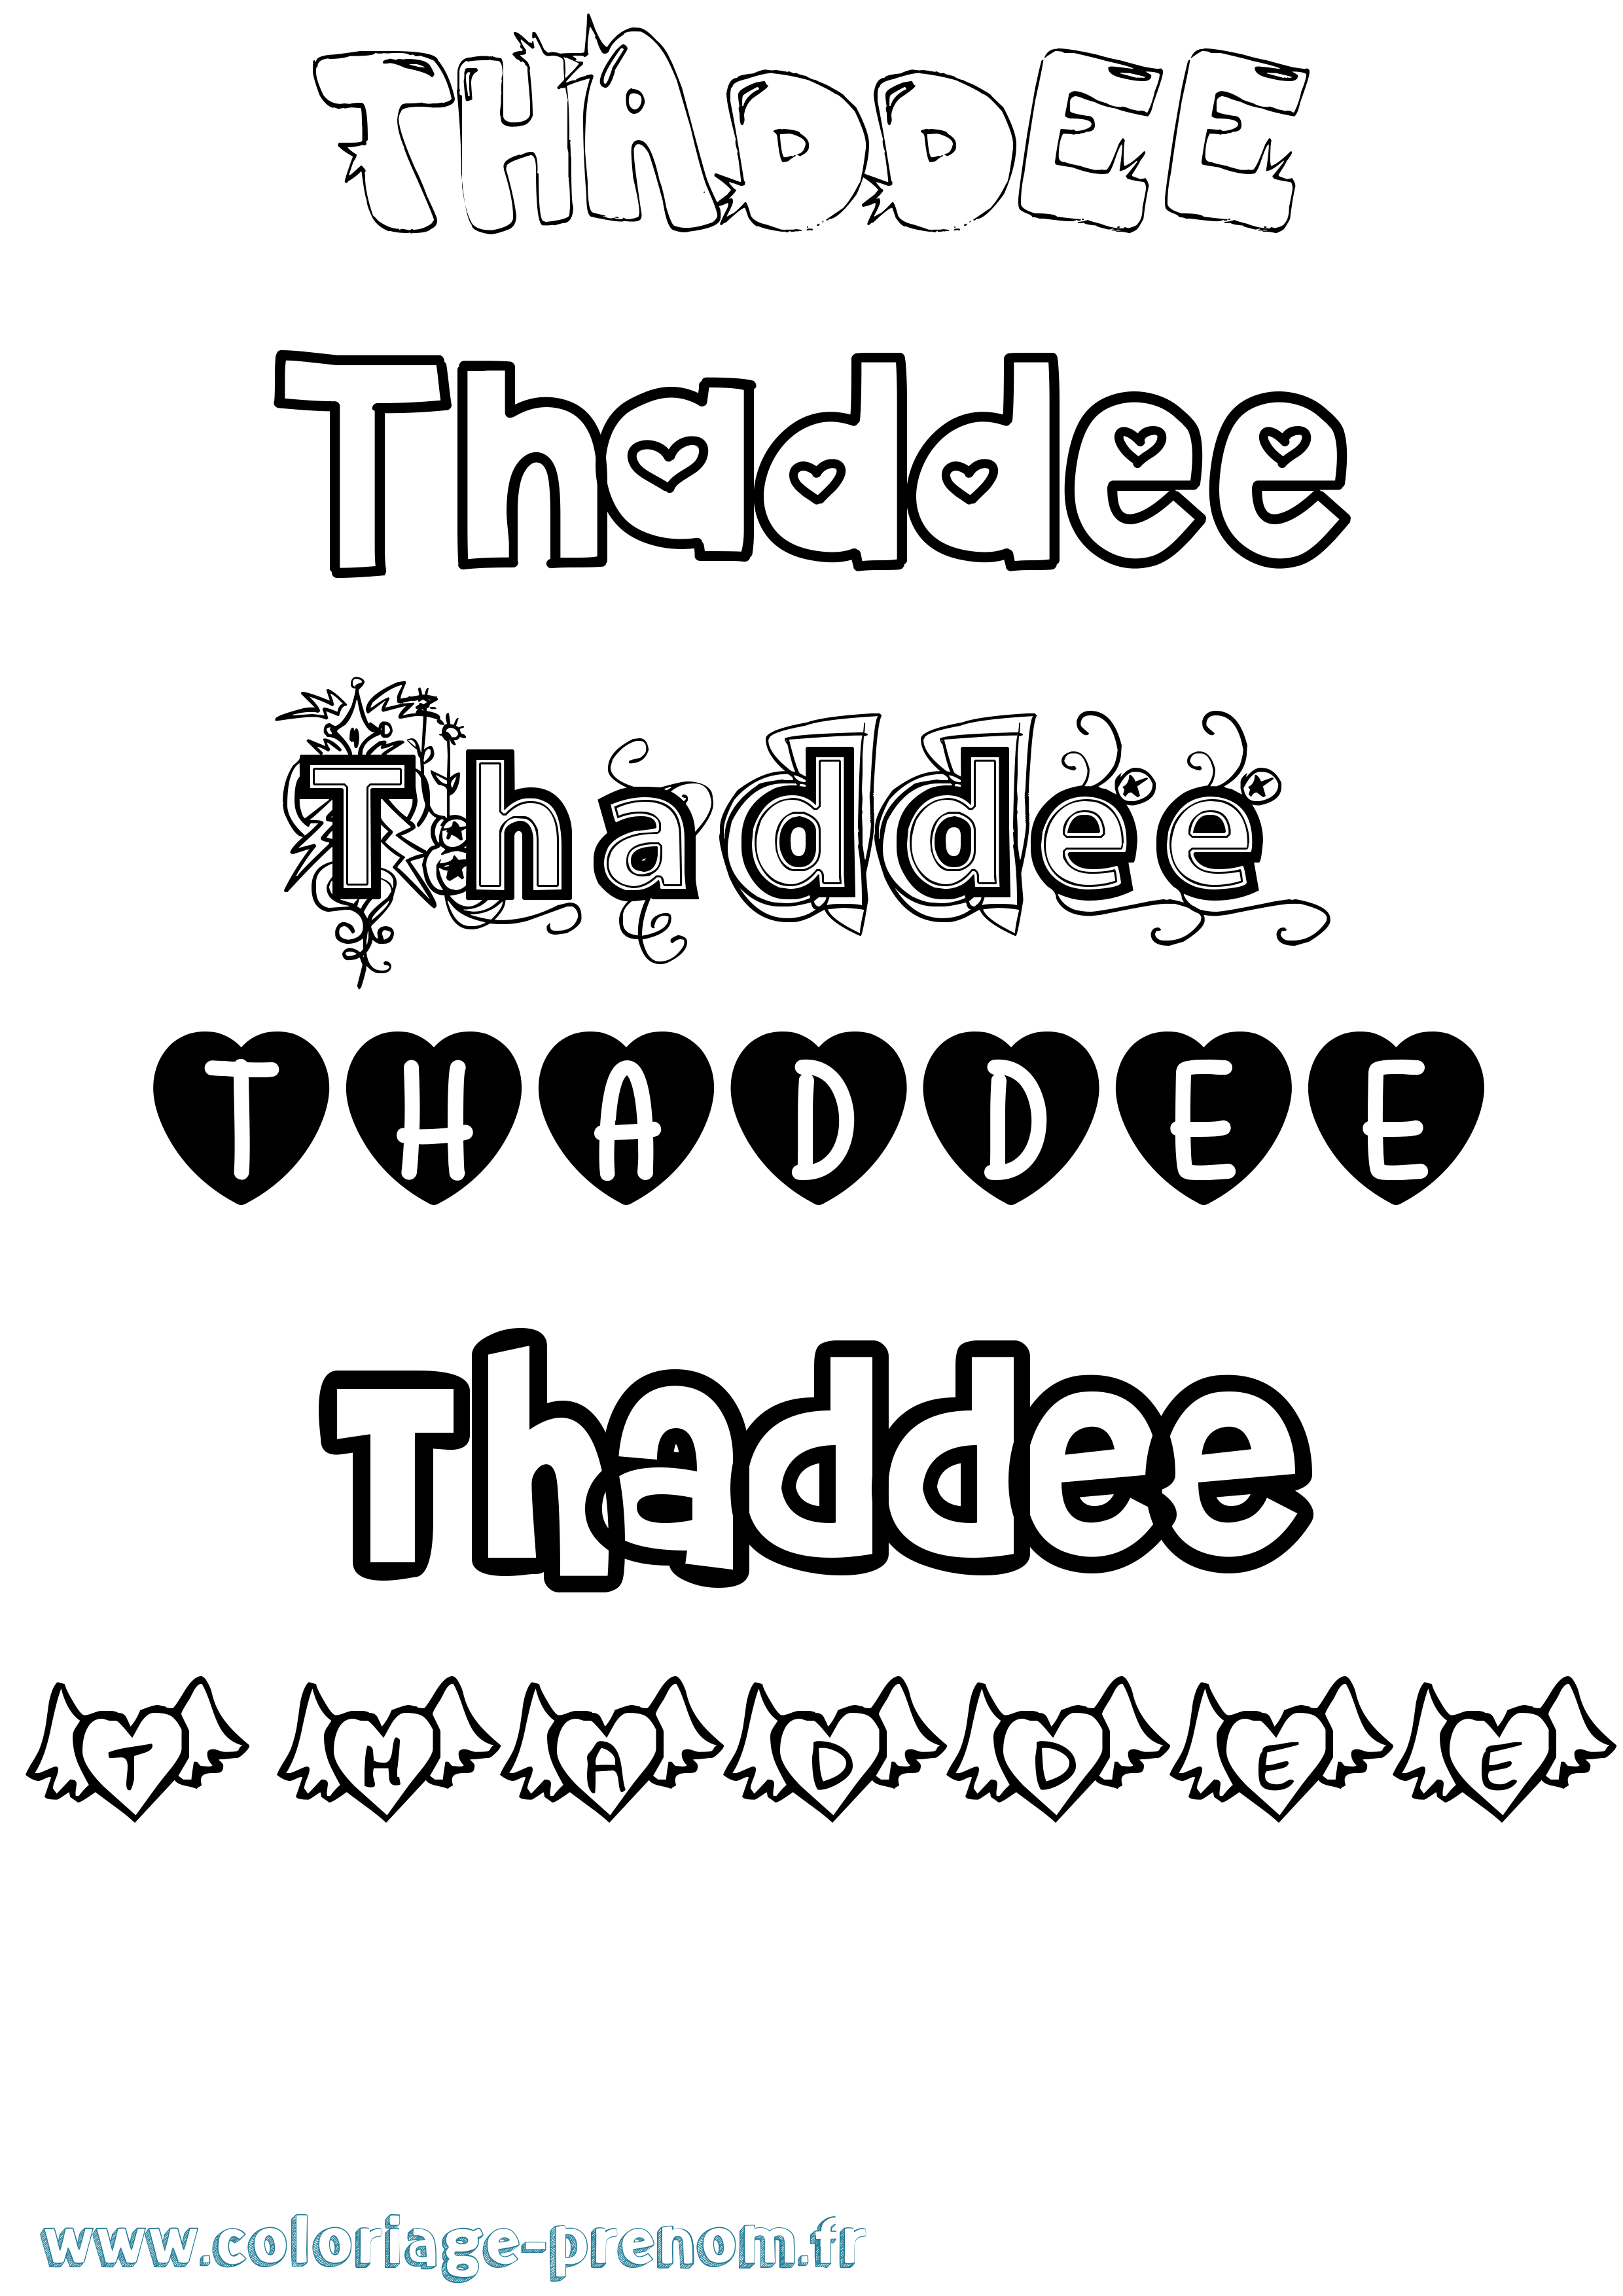 Coloriage prénom Thaddee Girly